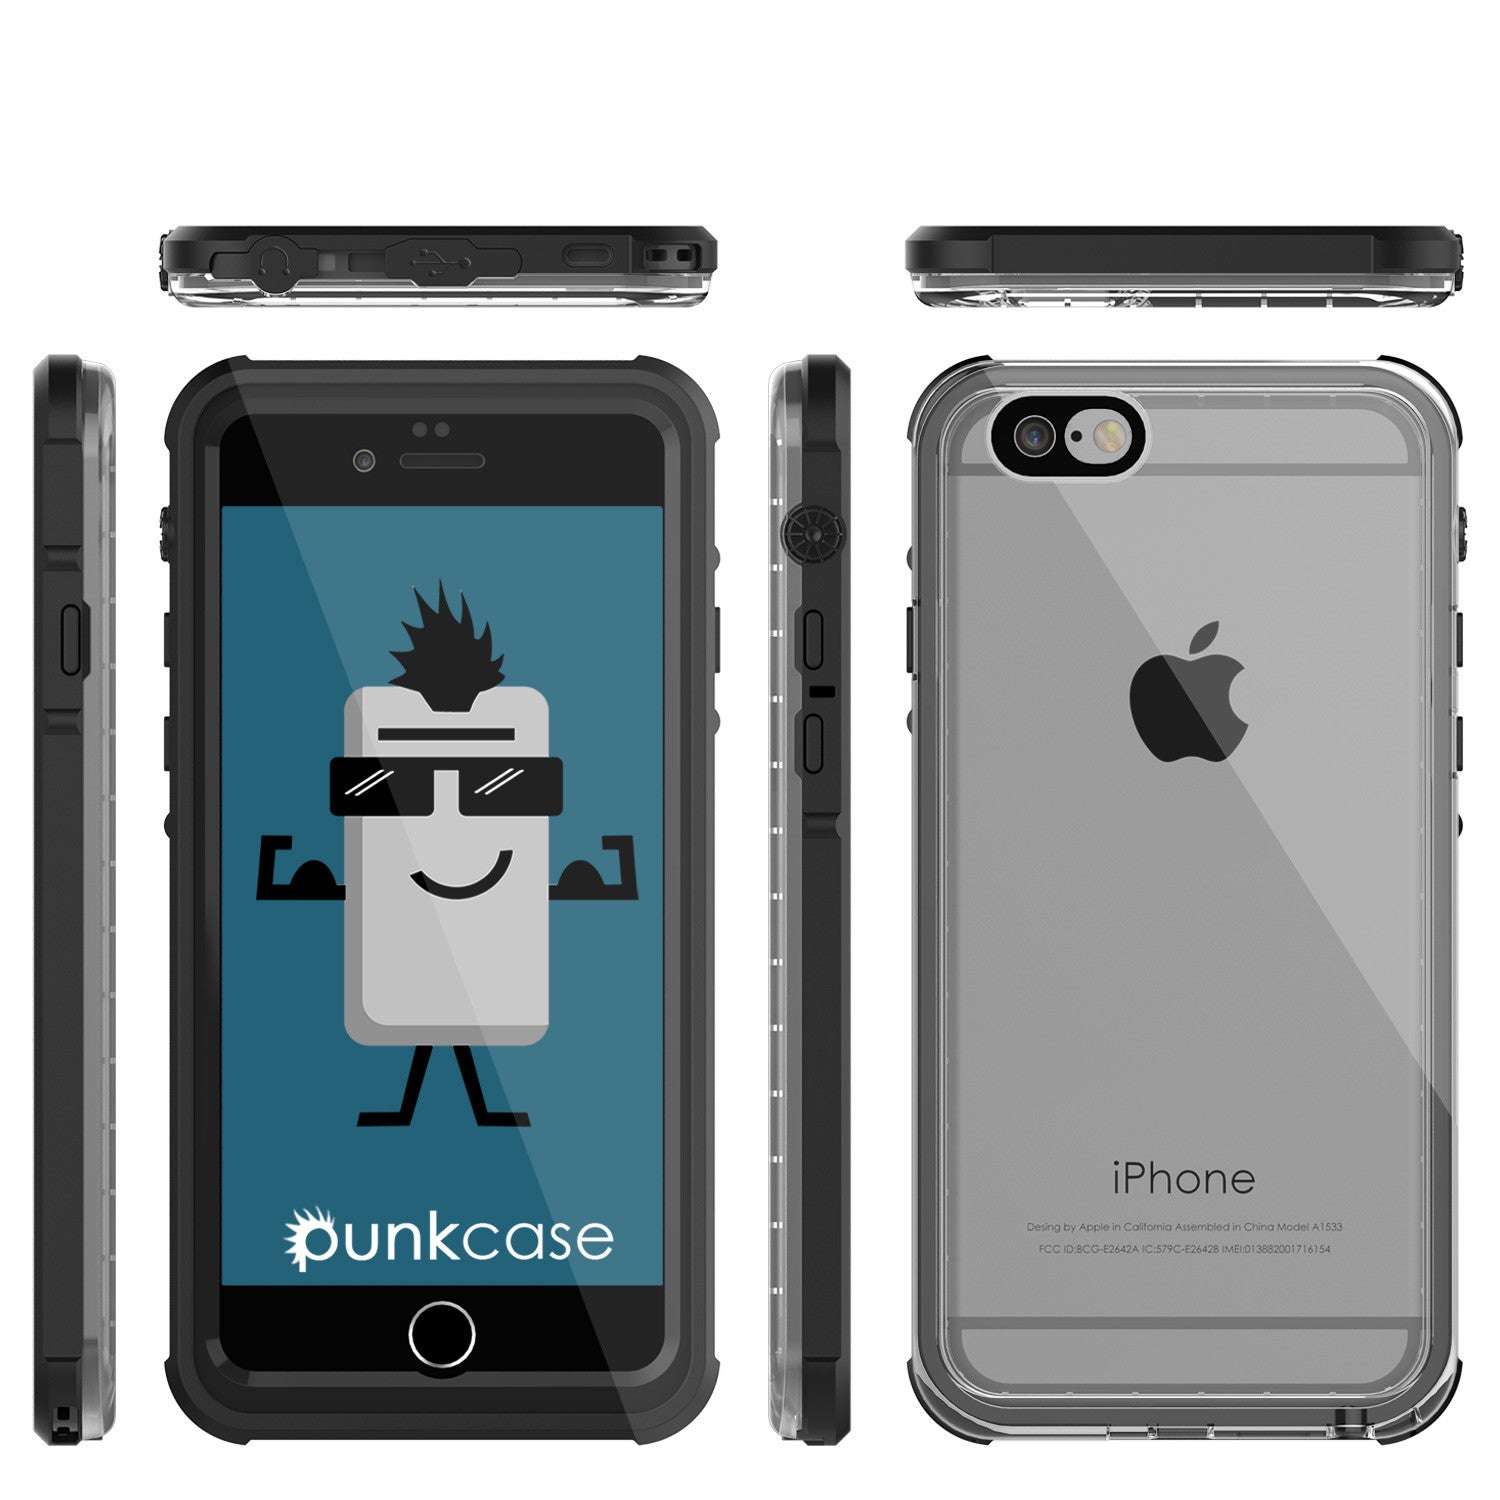 Punkcase Waterproof Phone Case Iphone 6s 6 Punkcase